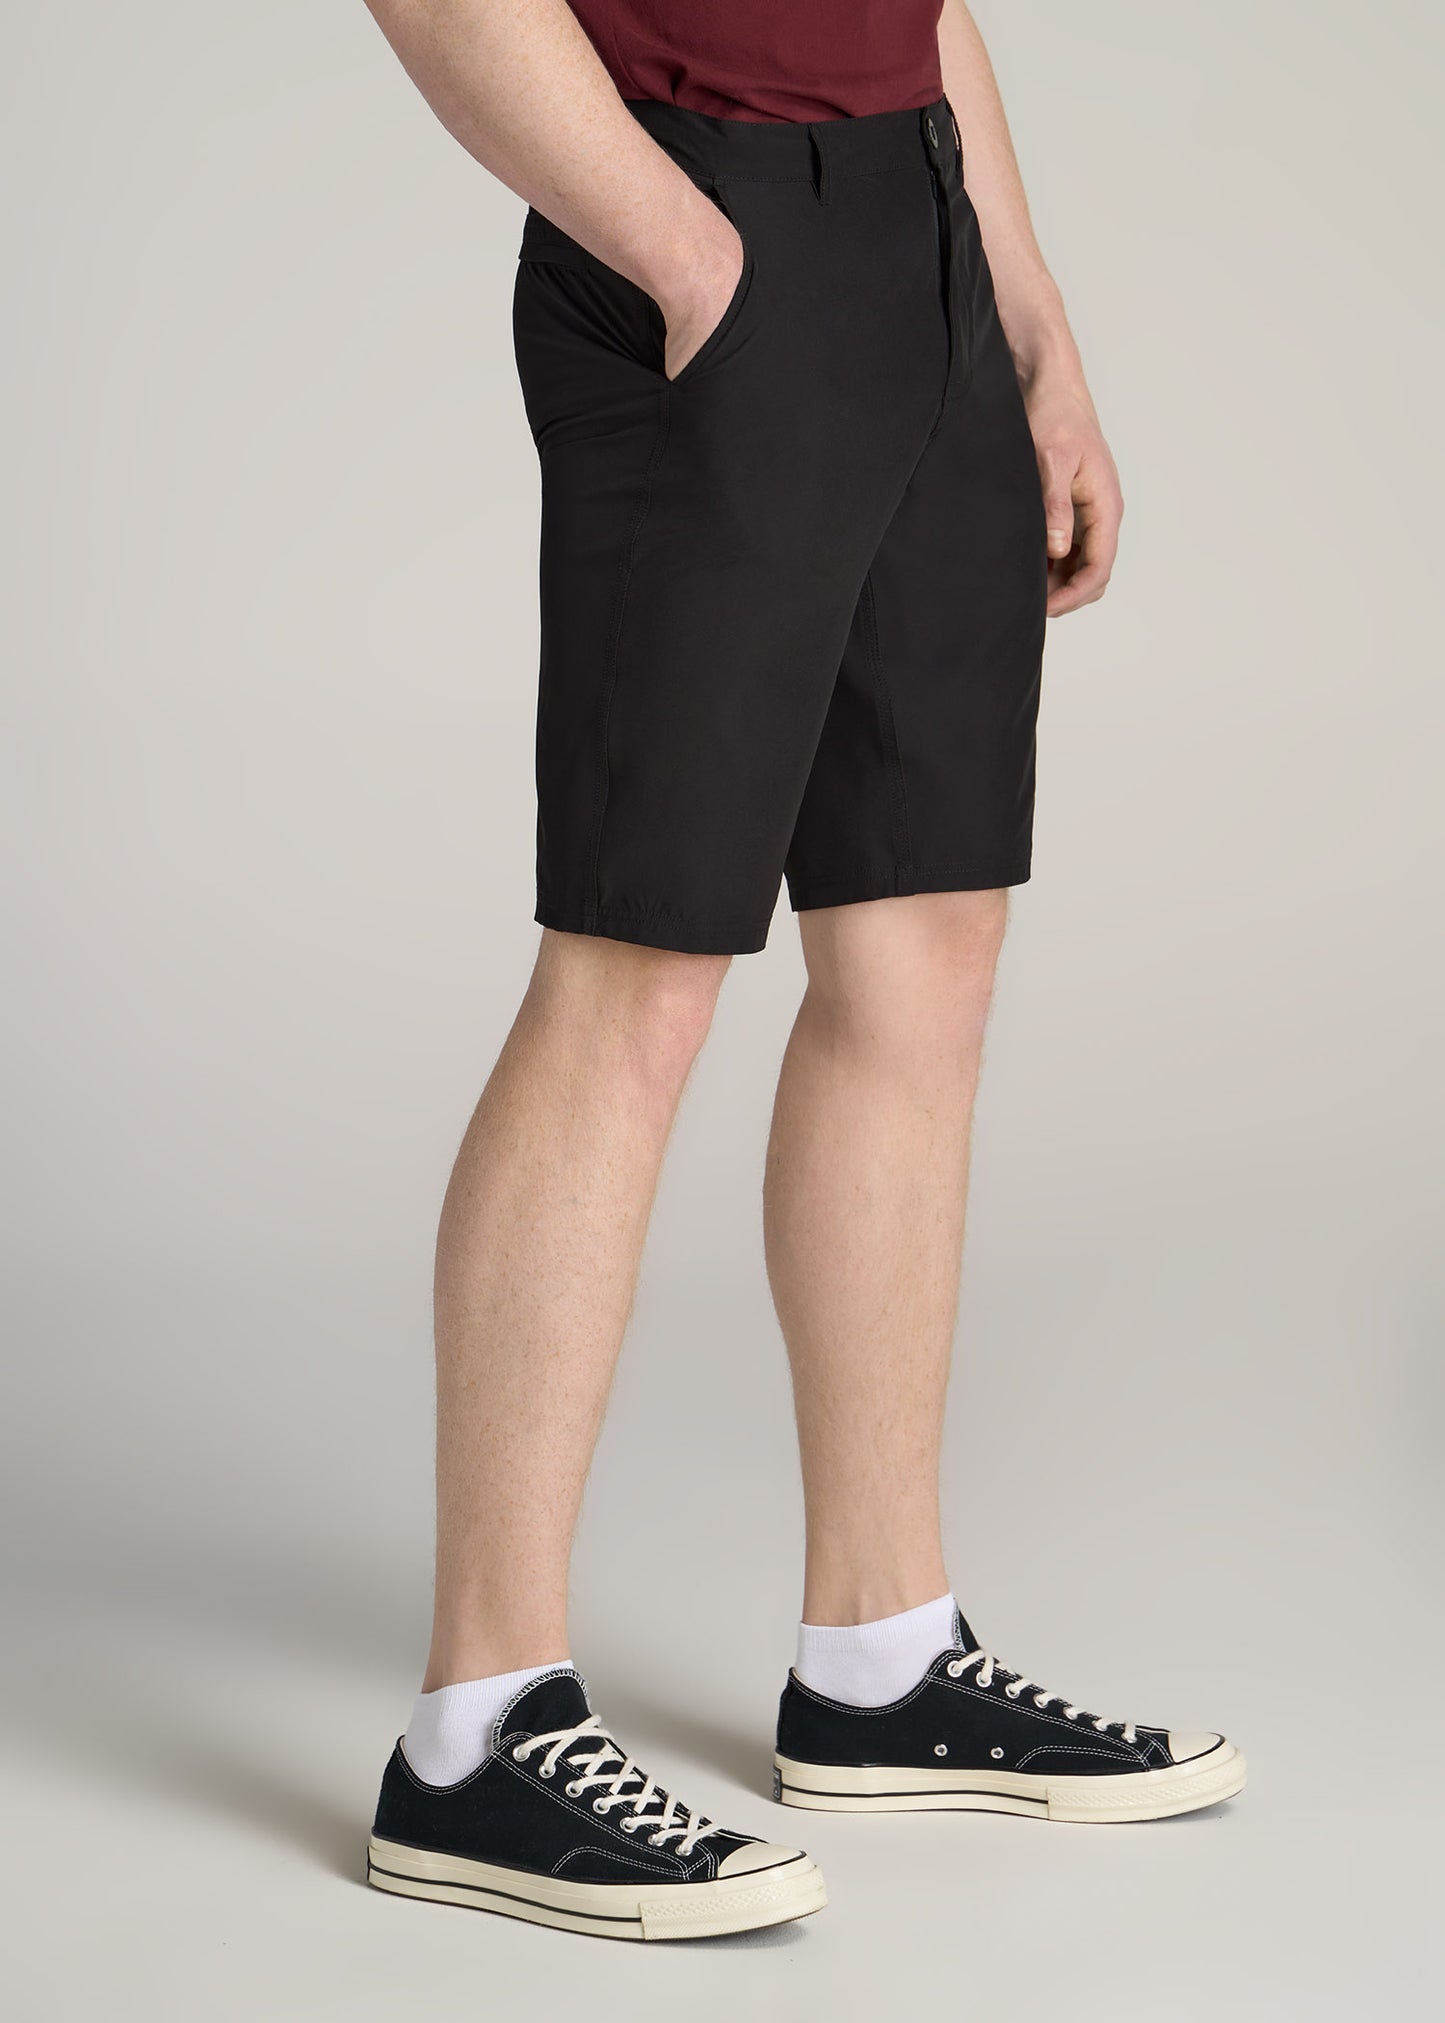 American-Tall-Men-Hybrid-Shorts-Shorts-Black-side